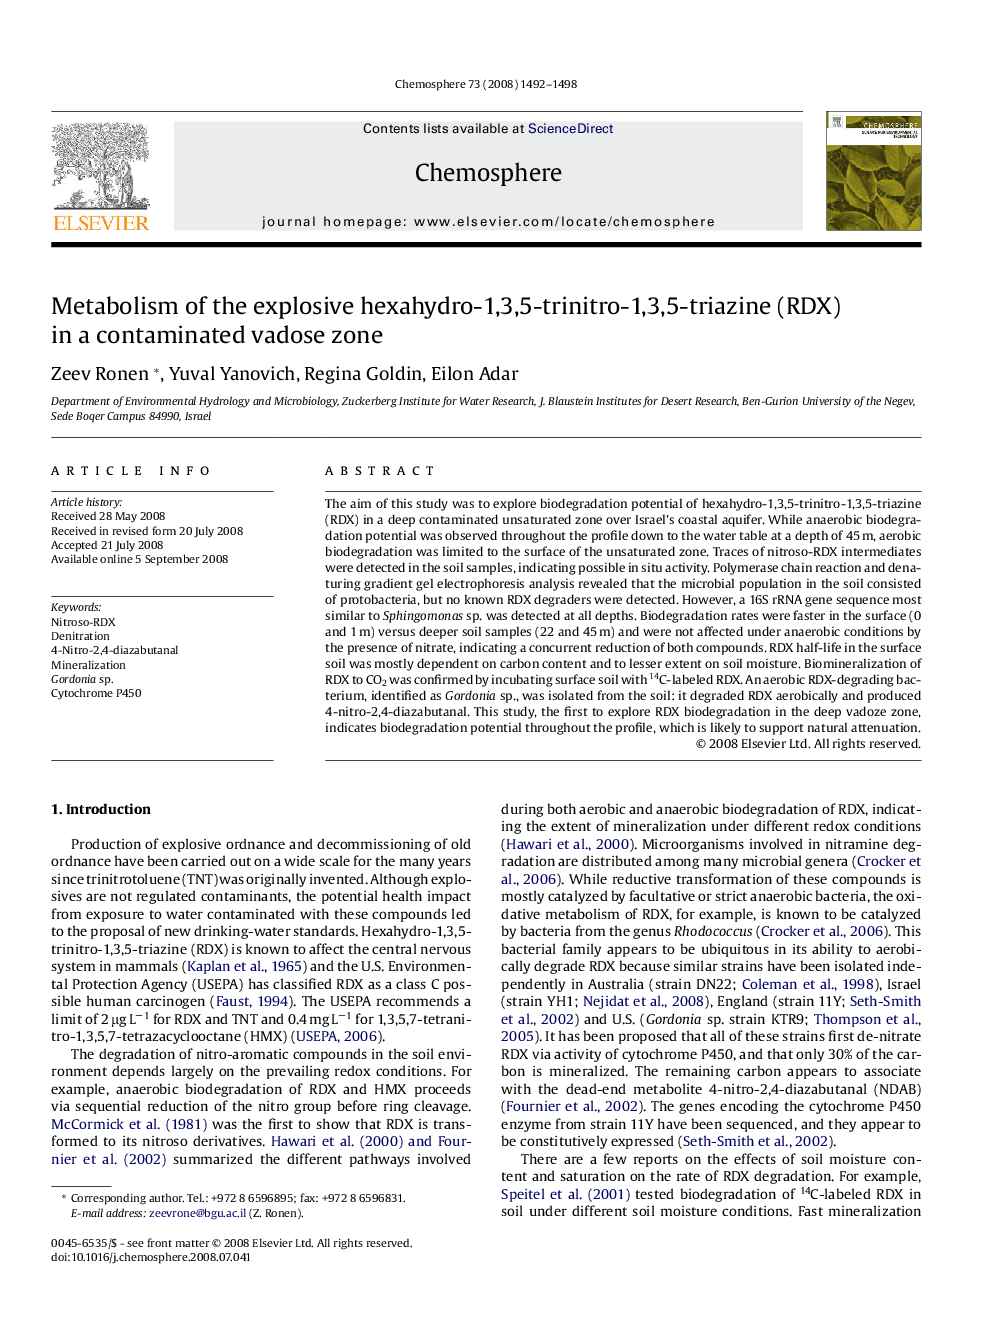 Metabolism of the explosive hexahydro-1,3,5-trinitro-1,3,5-triazine (RDX) in a contaminated vadose zone